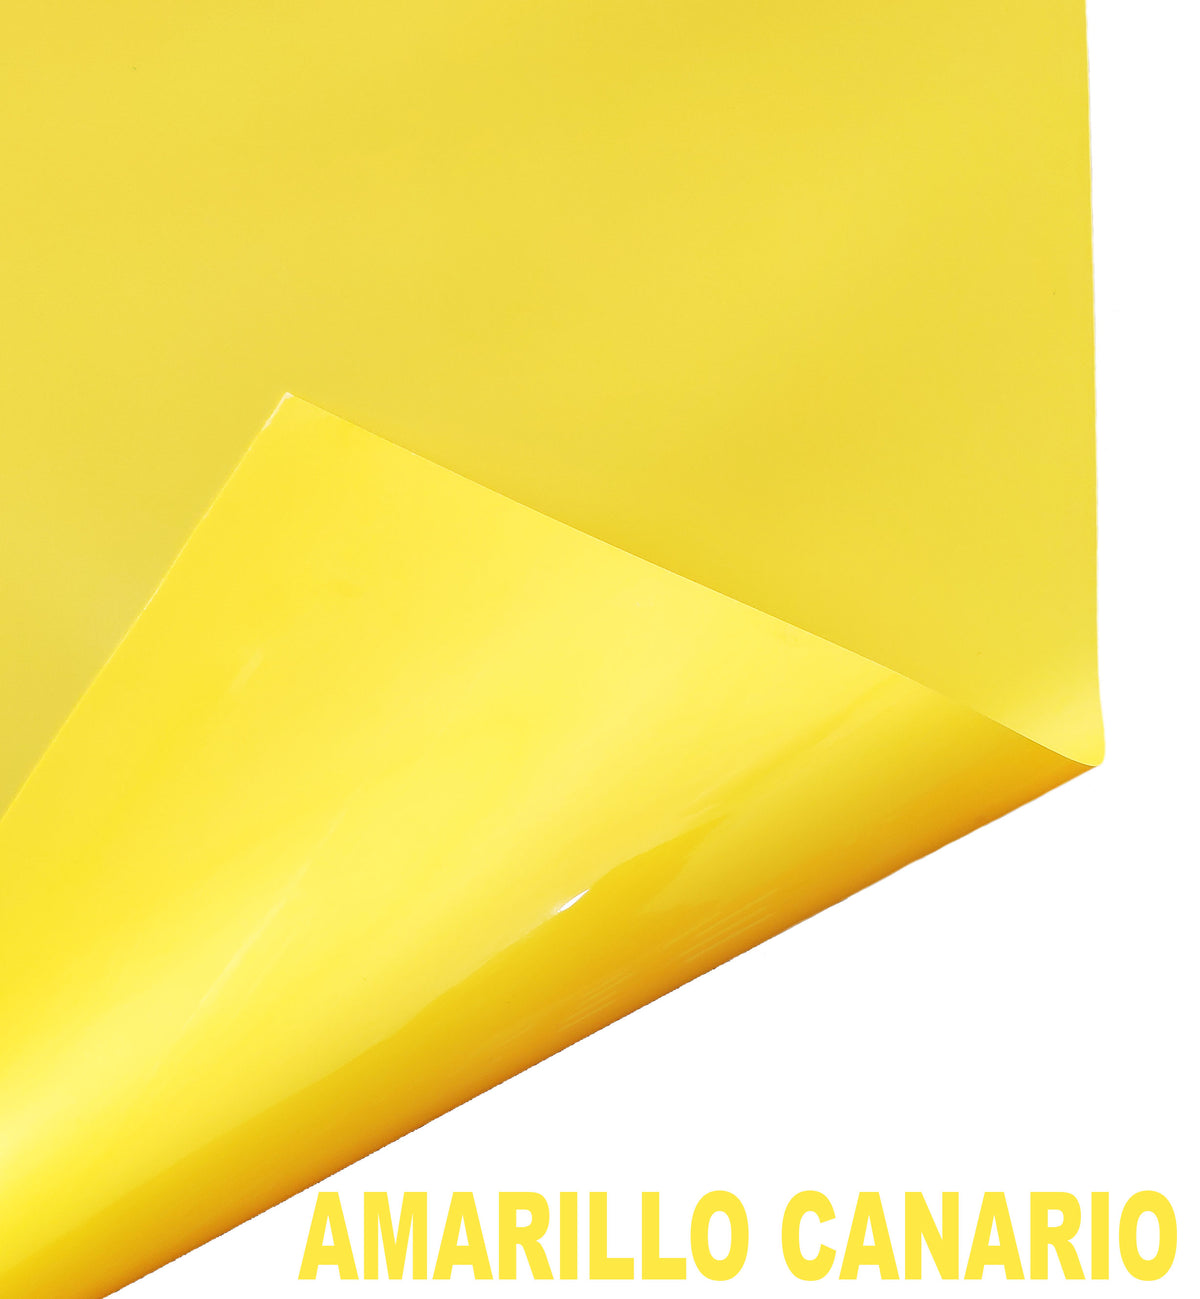 amarillo canario (BASICO)